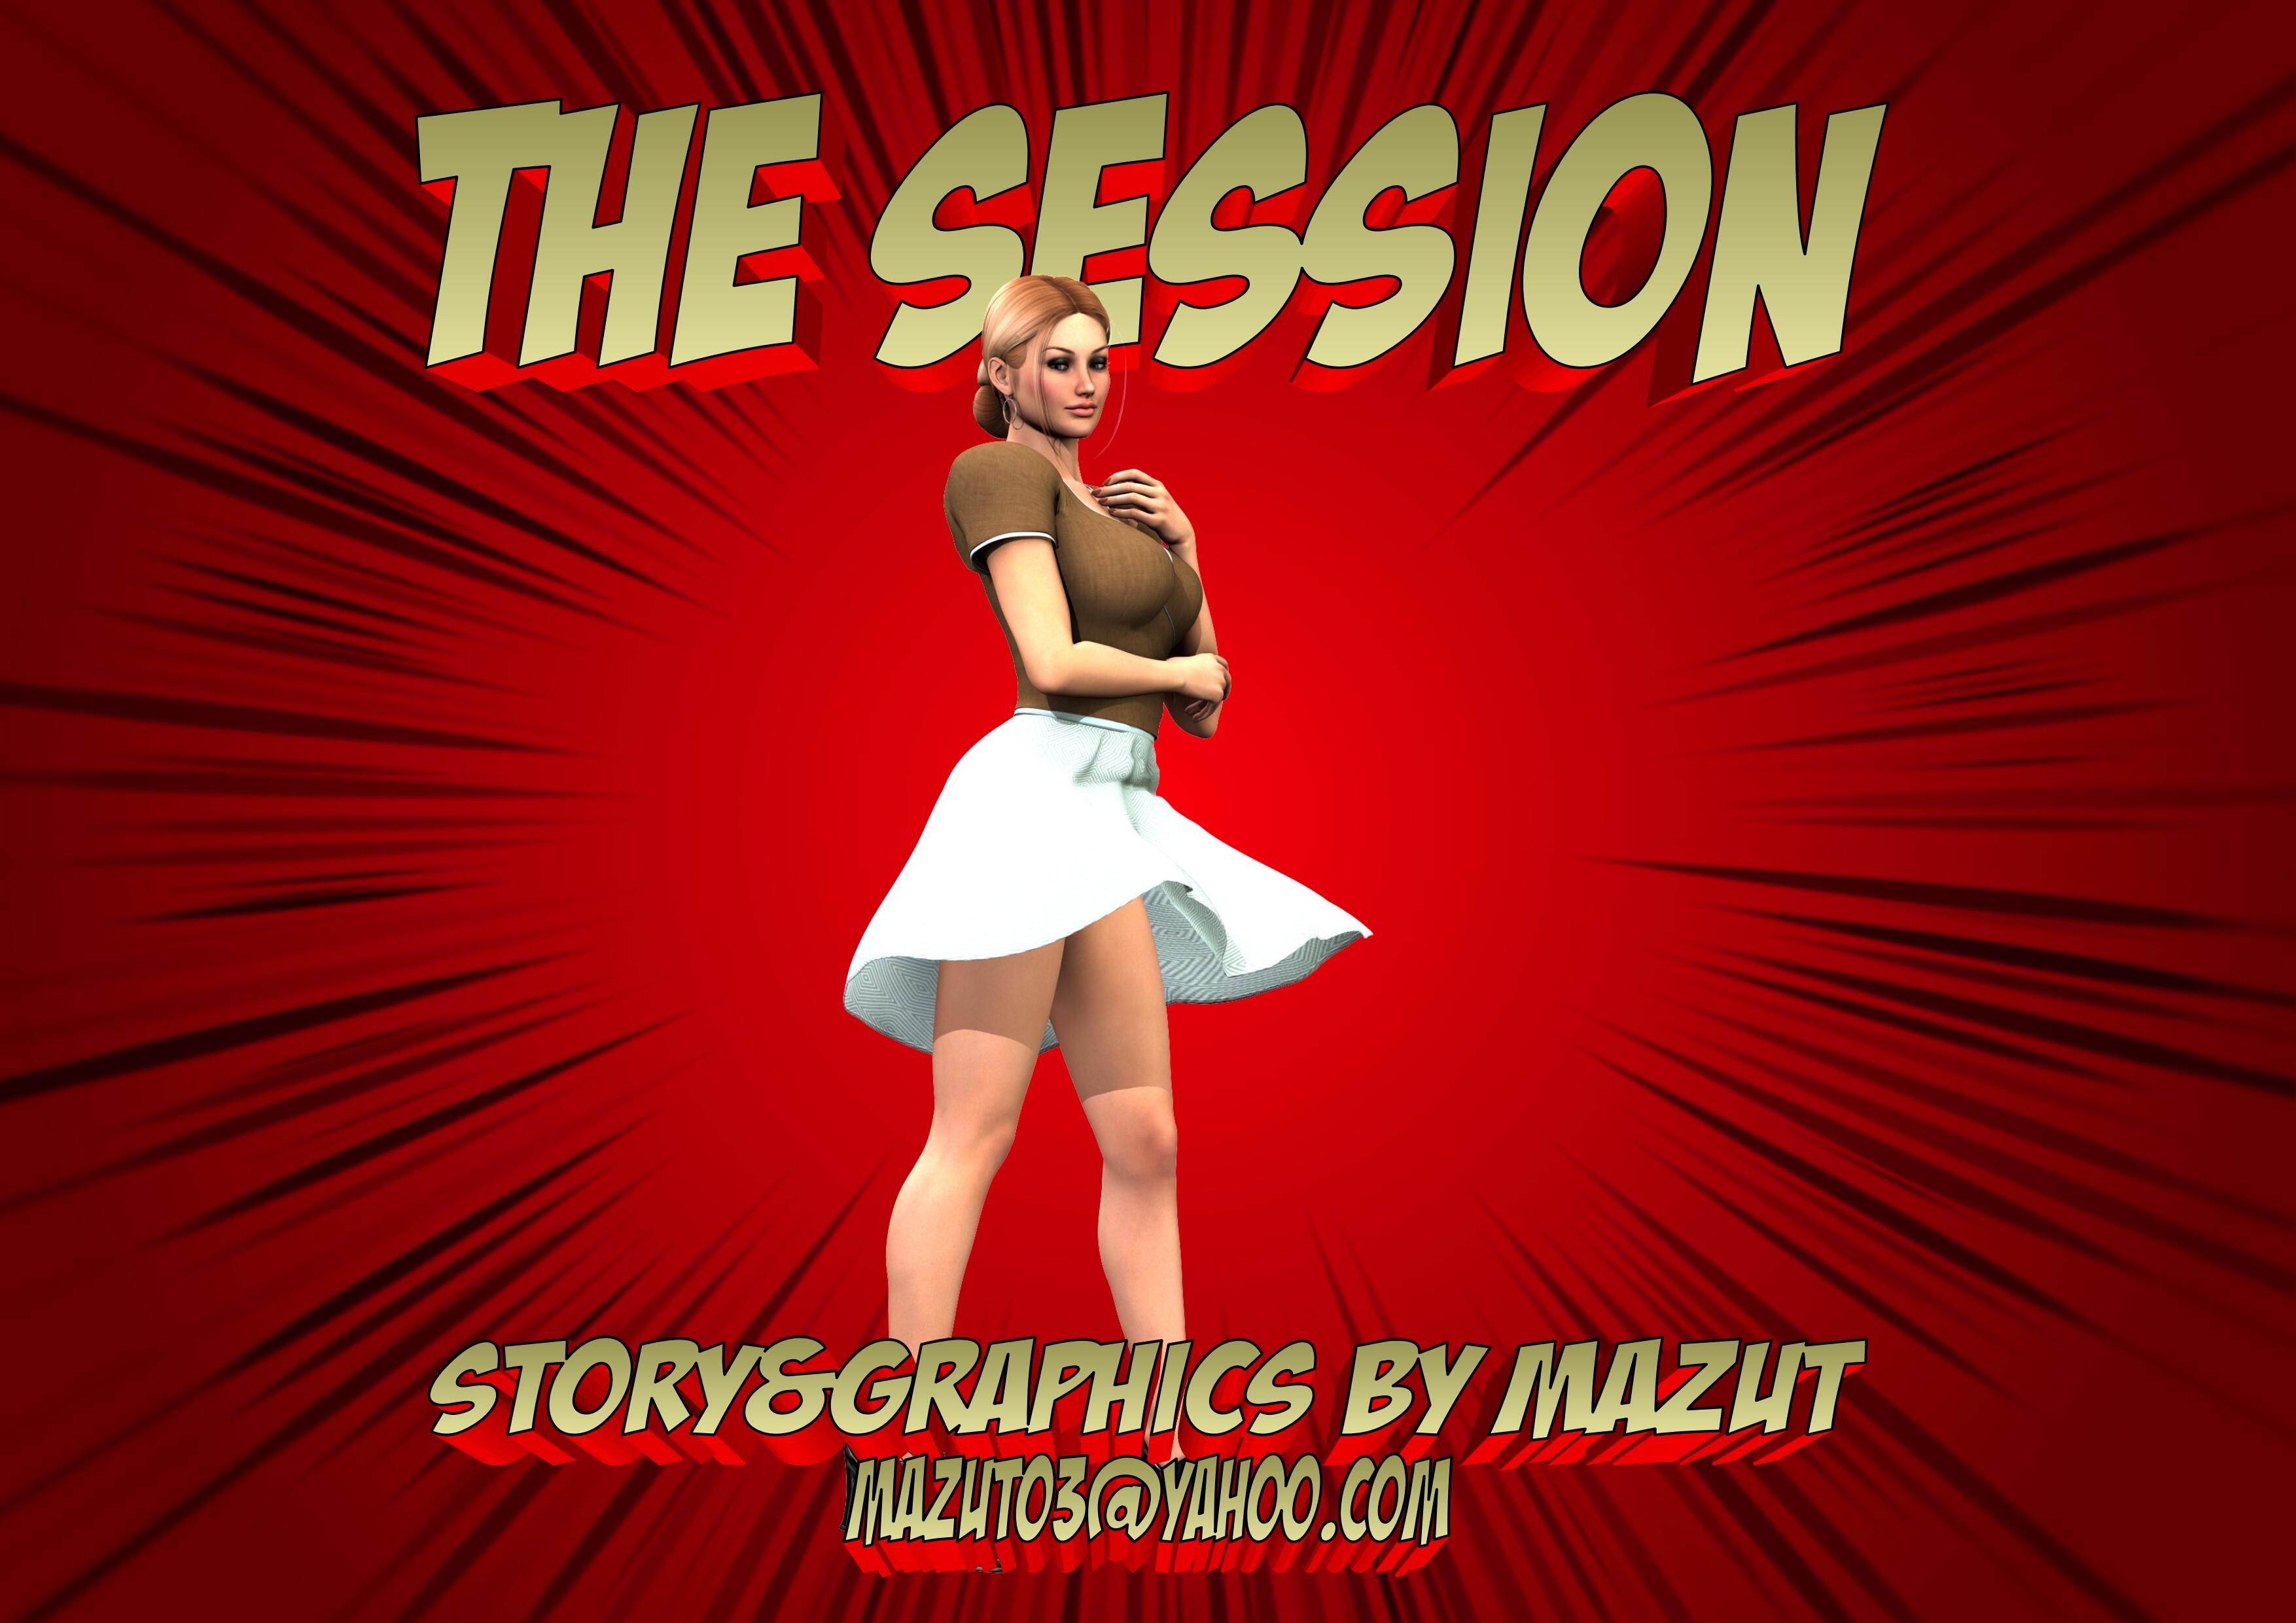 Mazut – The Session